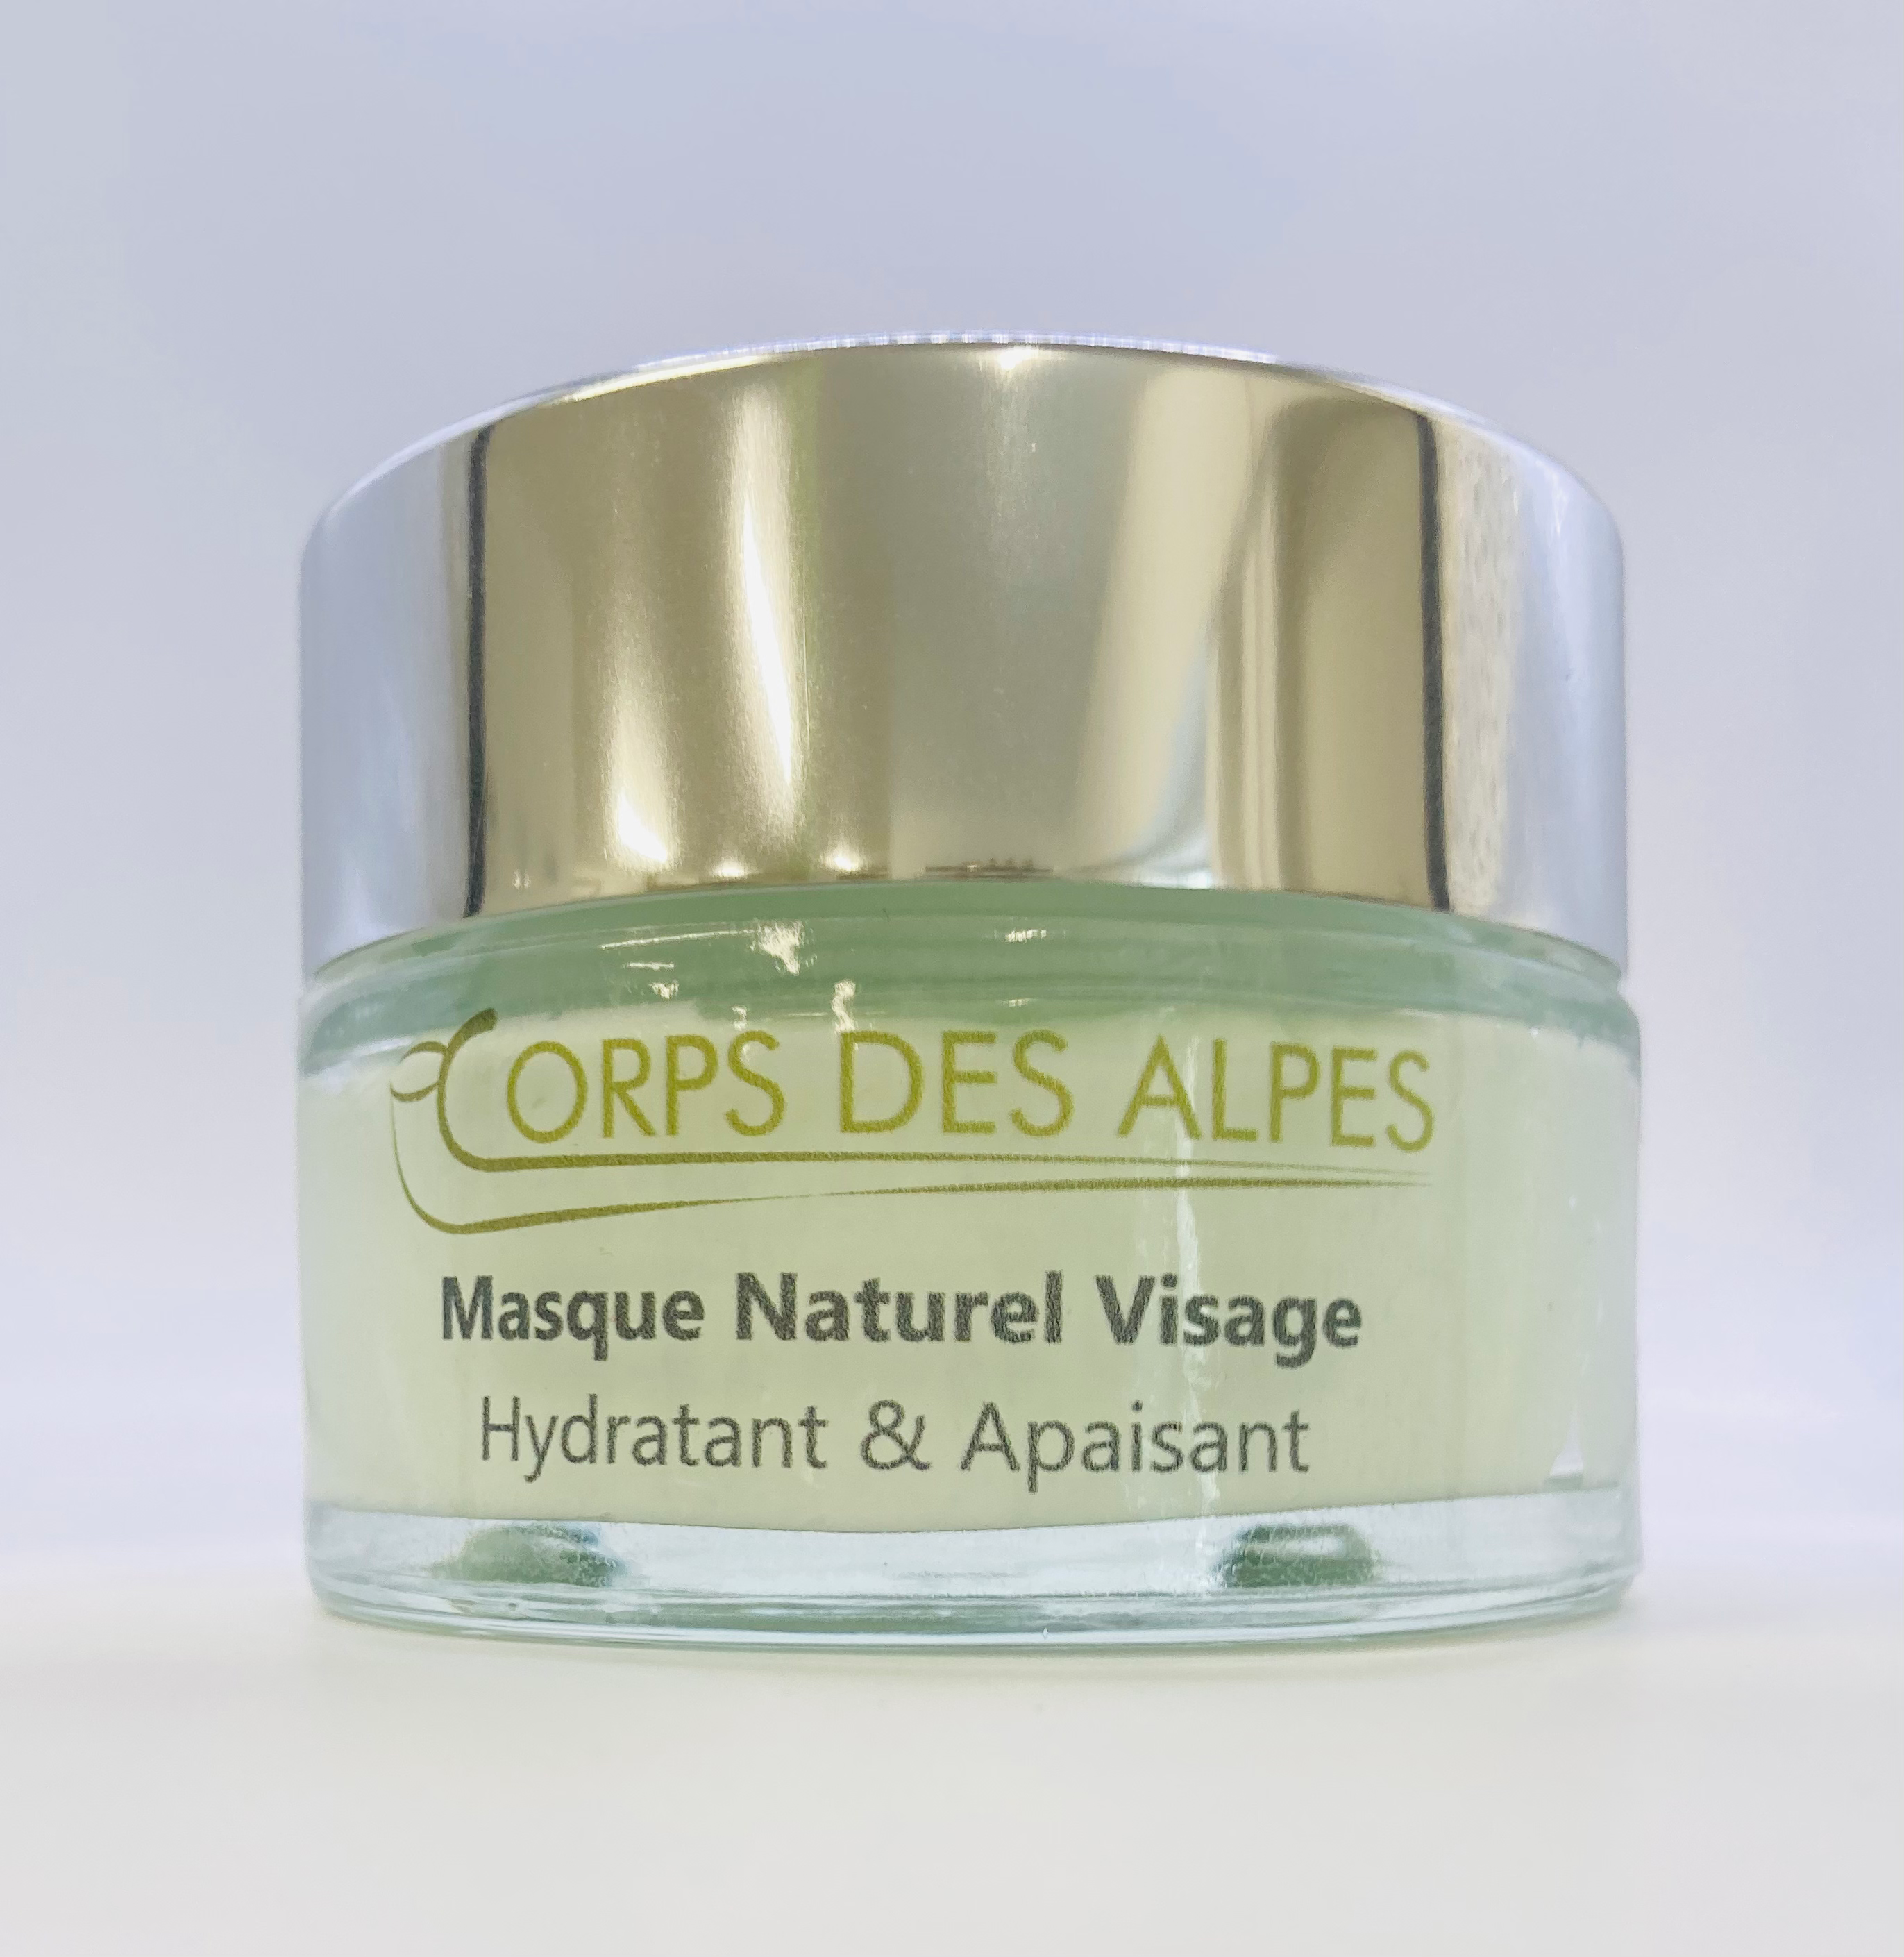 Masque Naturel Visage, artisanal product for direct sale in Switzerland